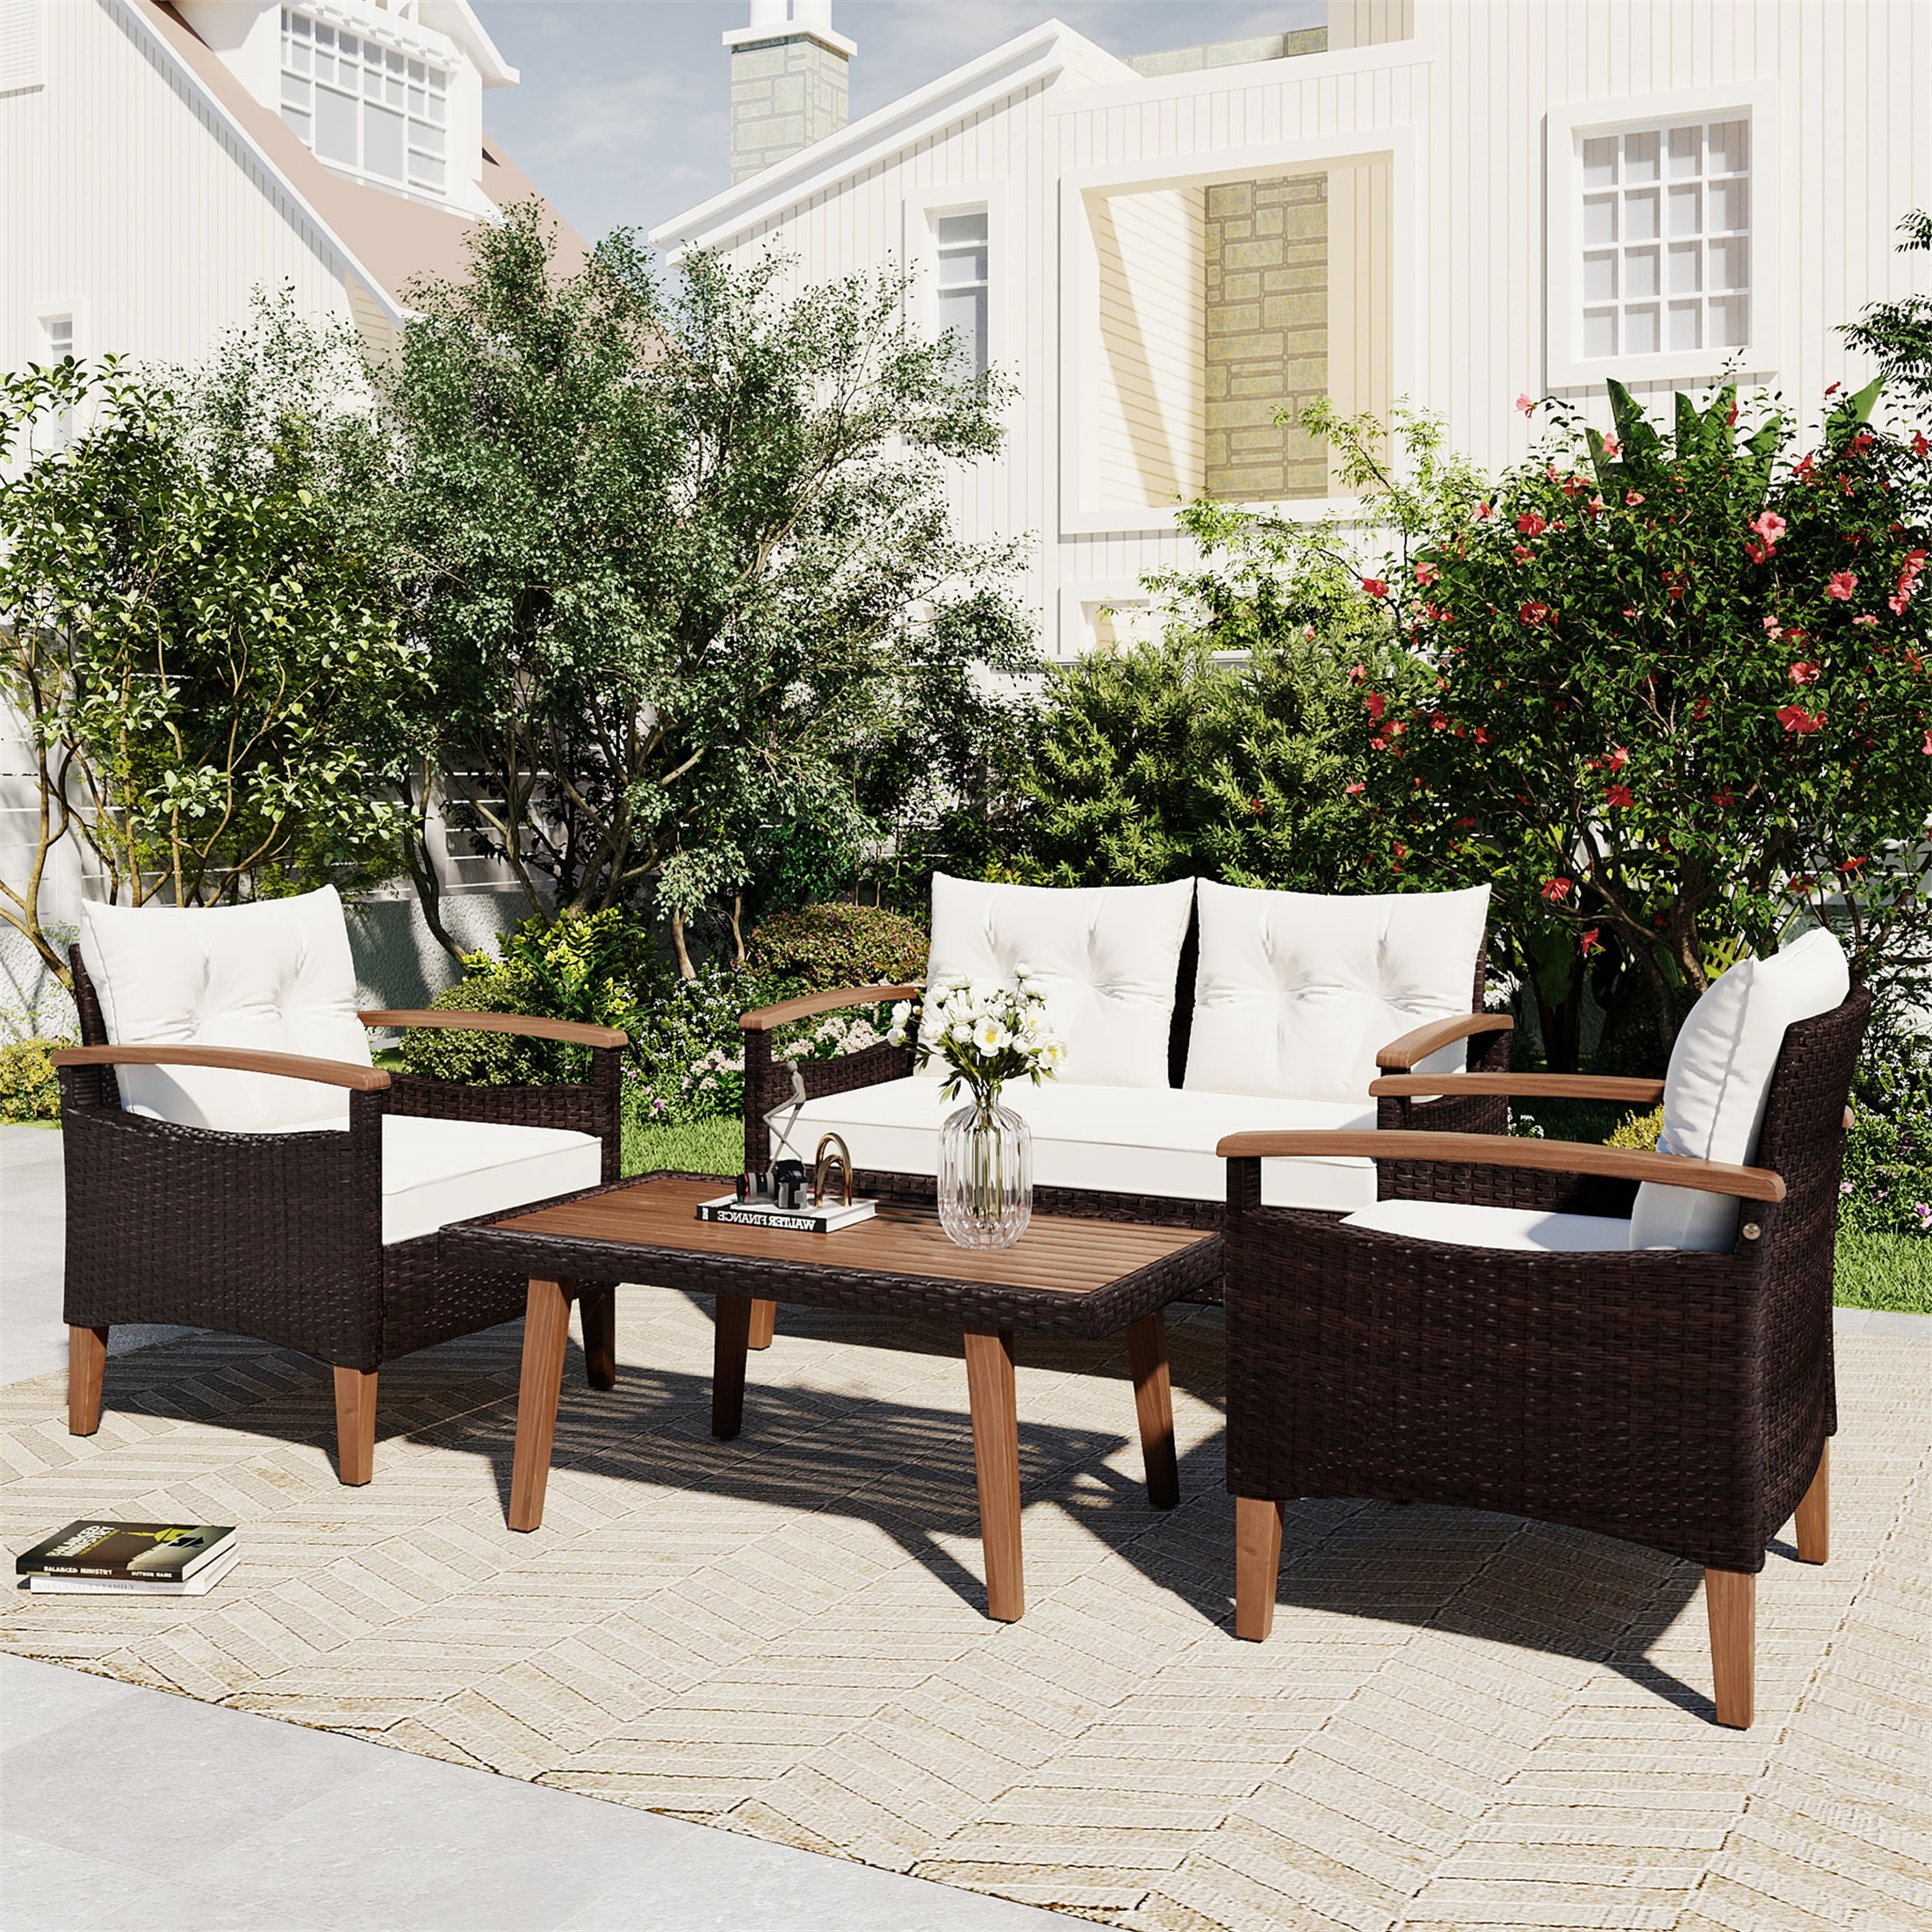 4-piece Garden Furniture Patio Seating Set